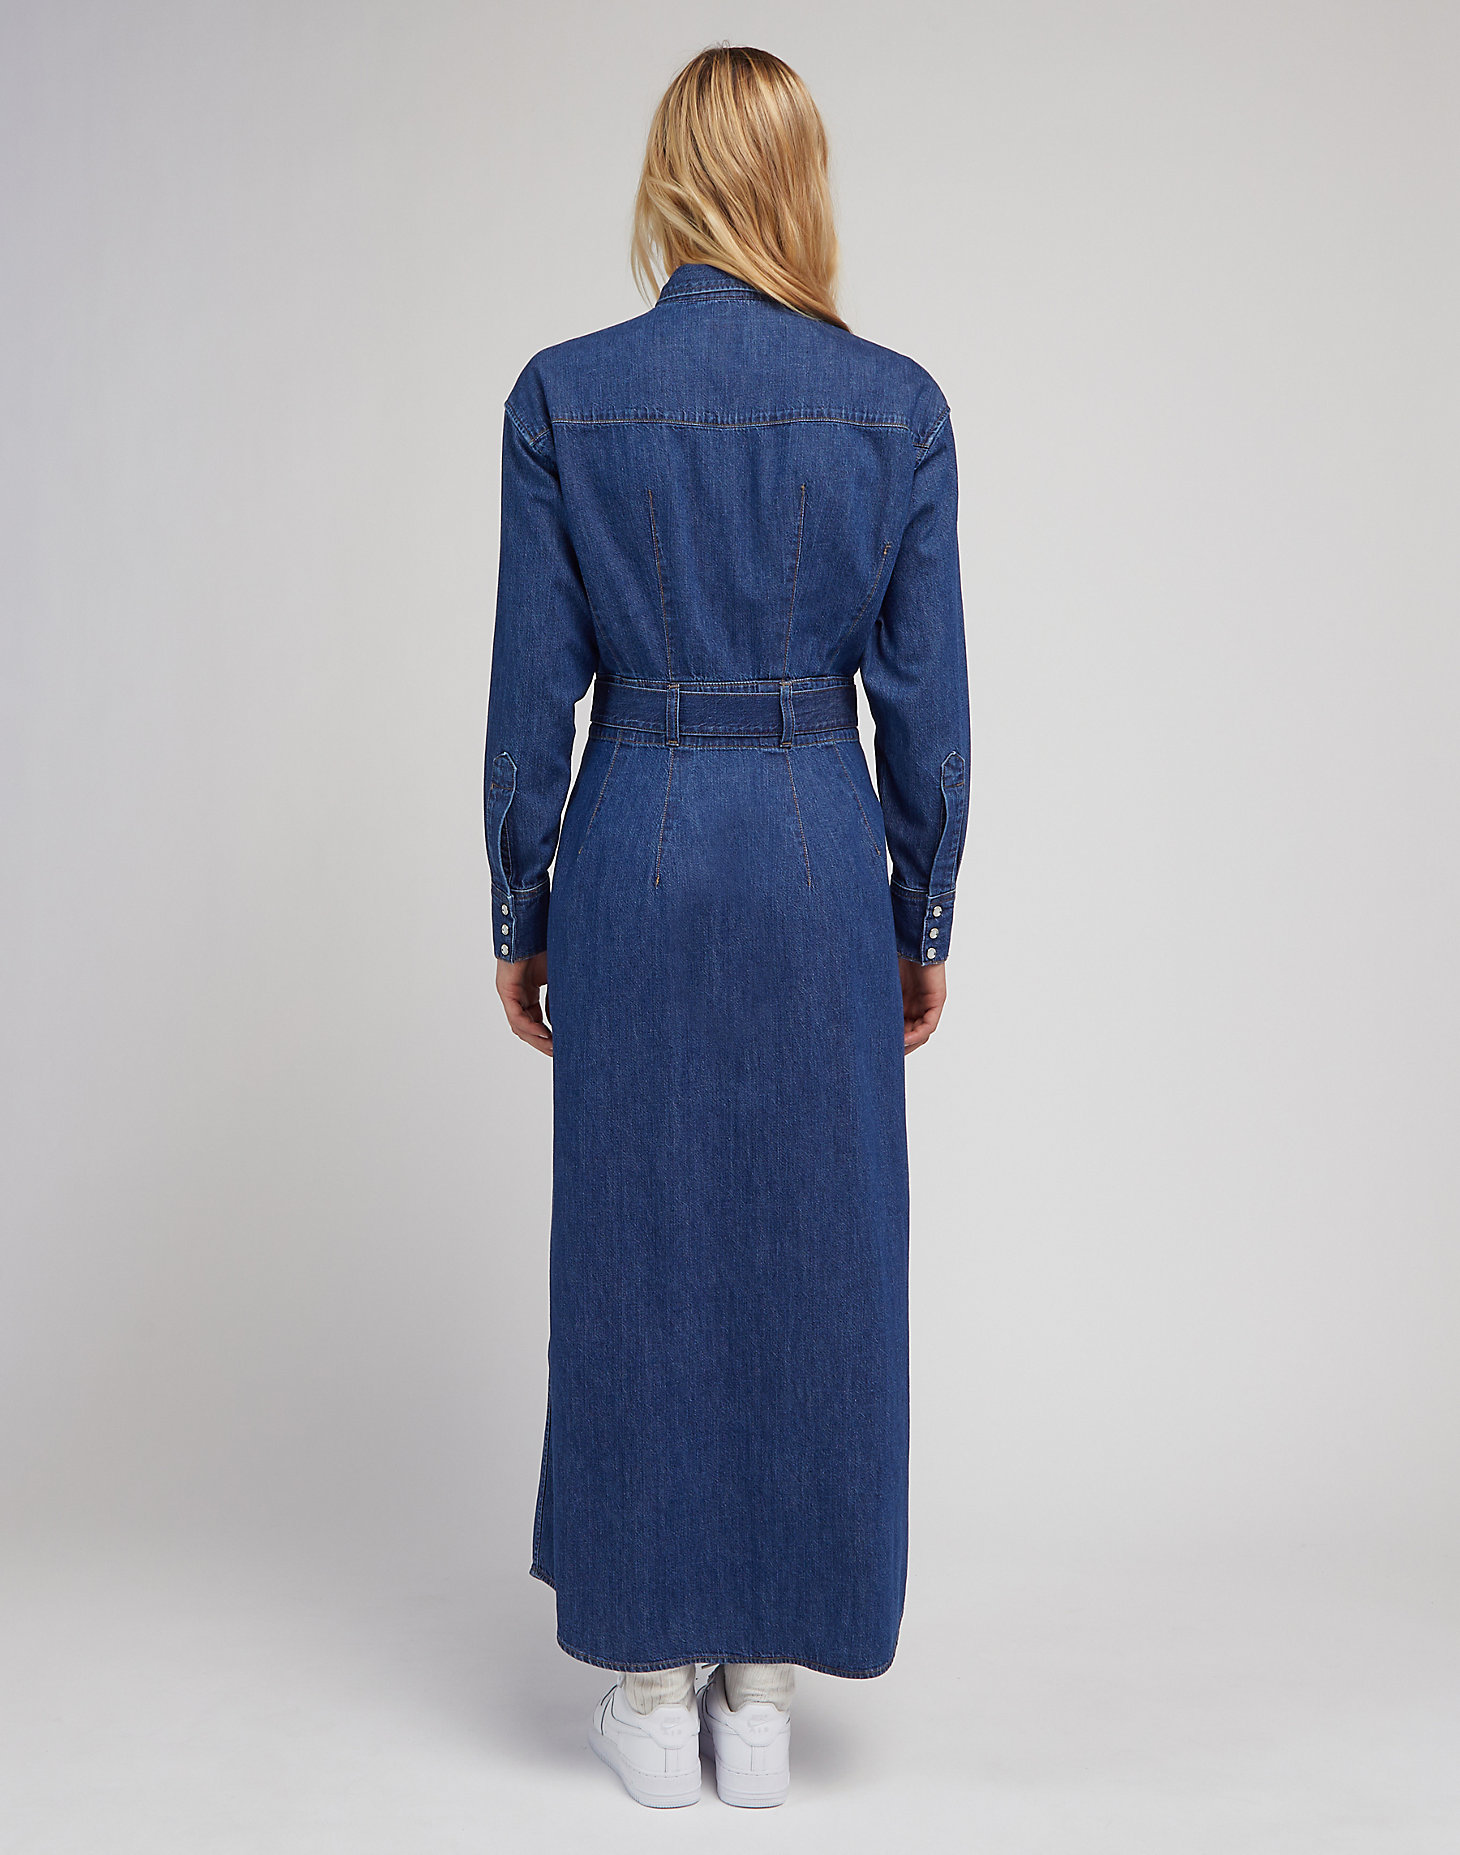 Belted Western Denim Dress in Supersonic Blue alternative view 1